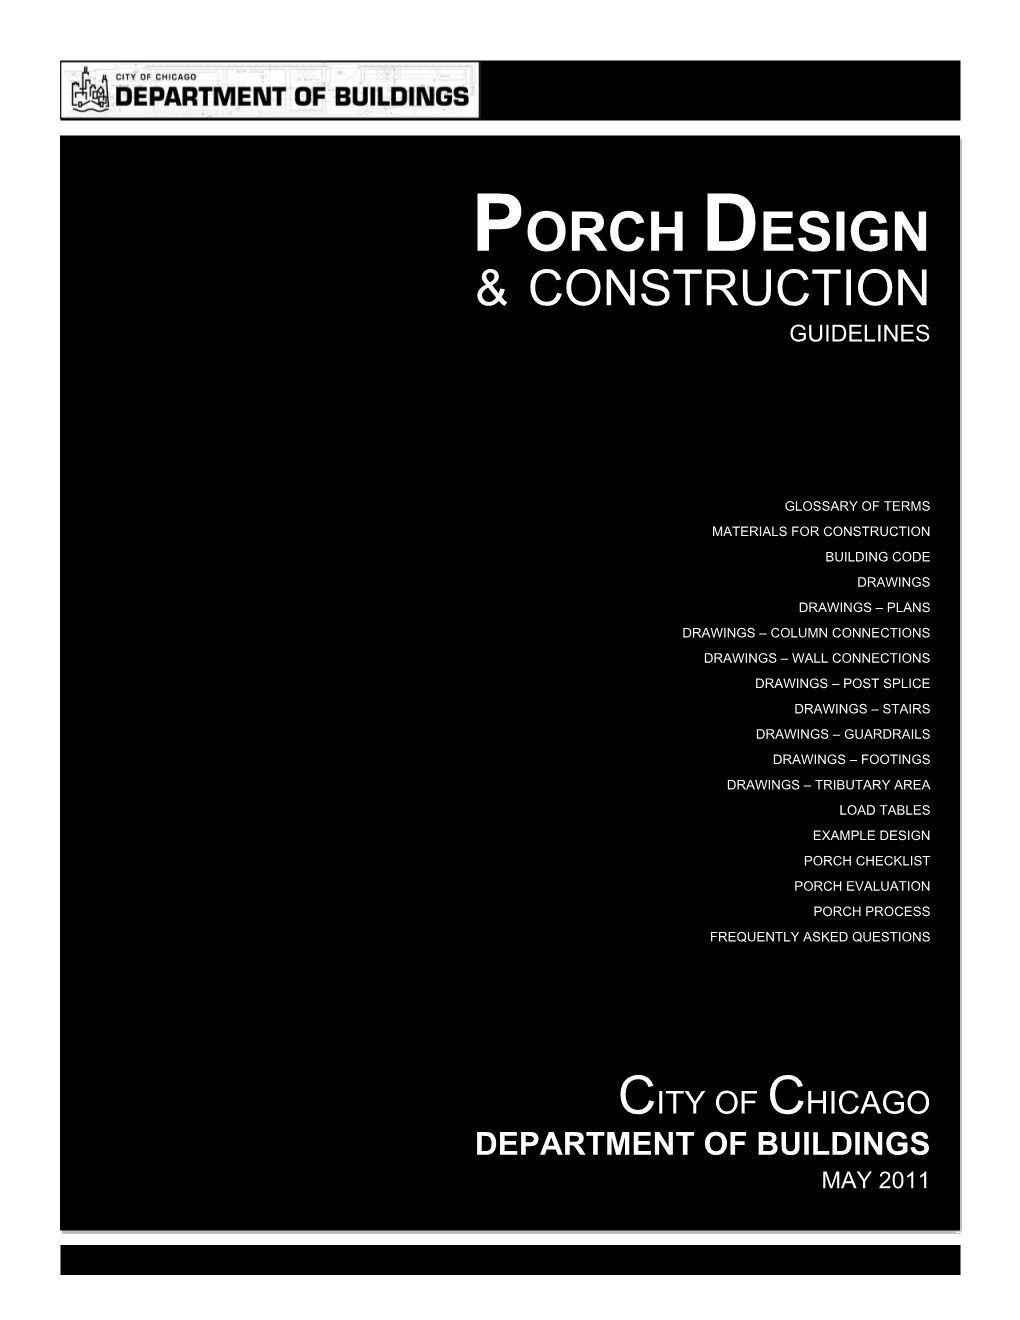 Porch Design & Construction Guidelines